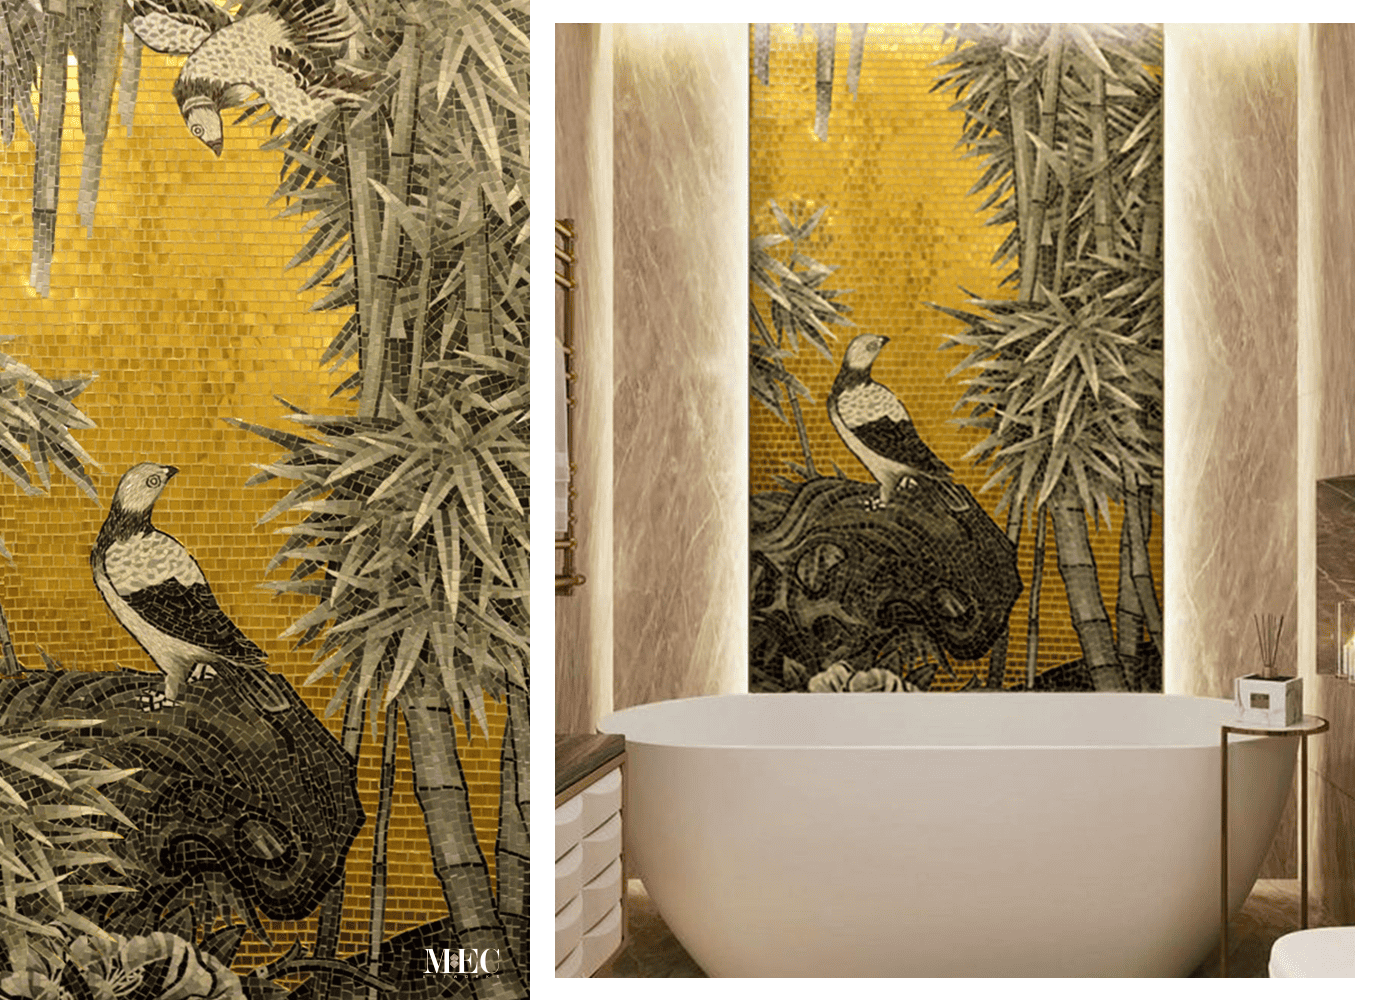 Mosaic wall art of birds and bamboo behind a modern bathtub